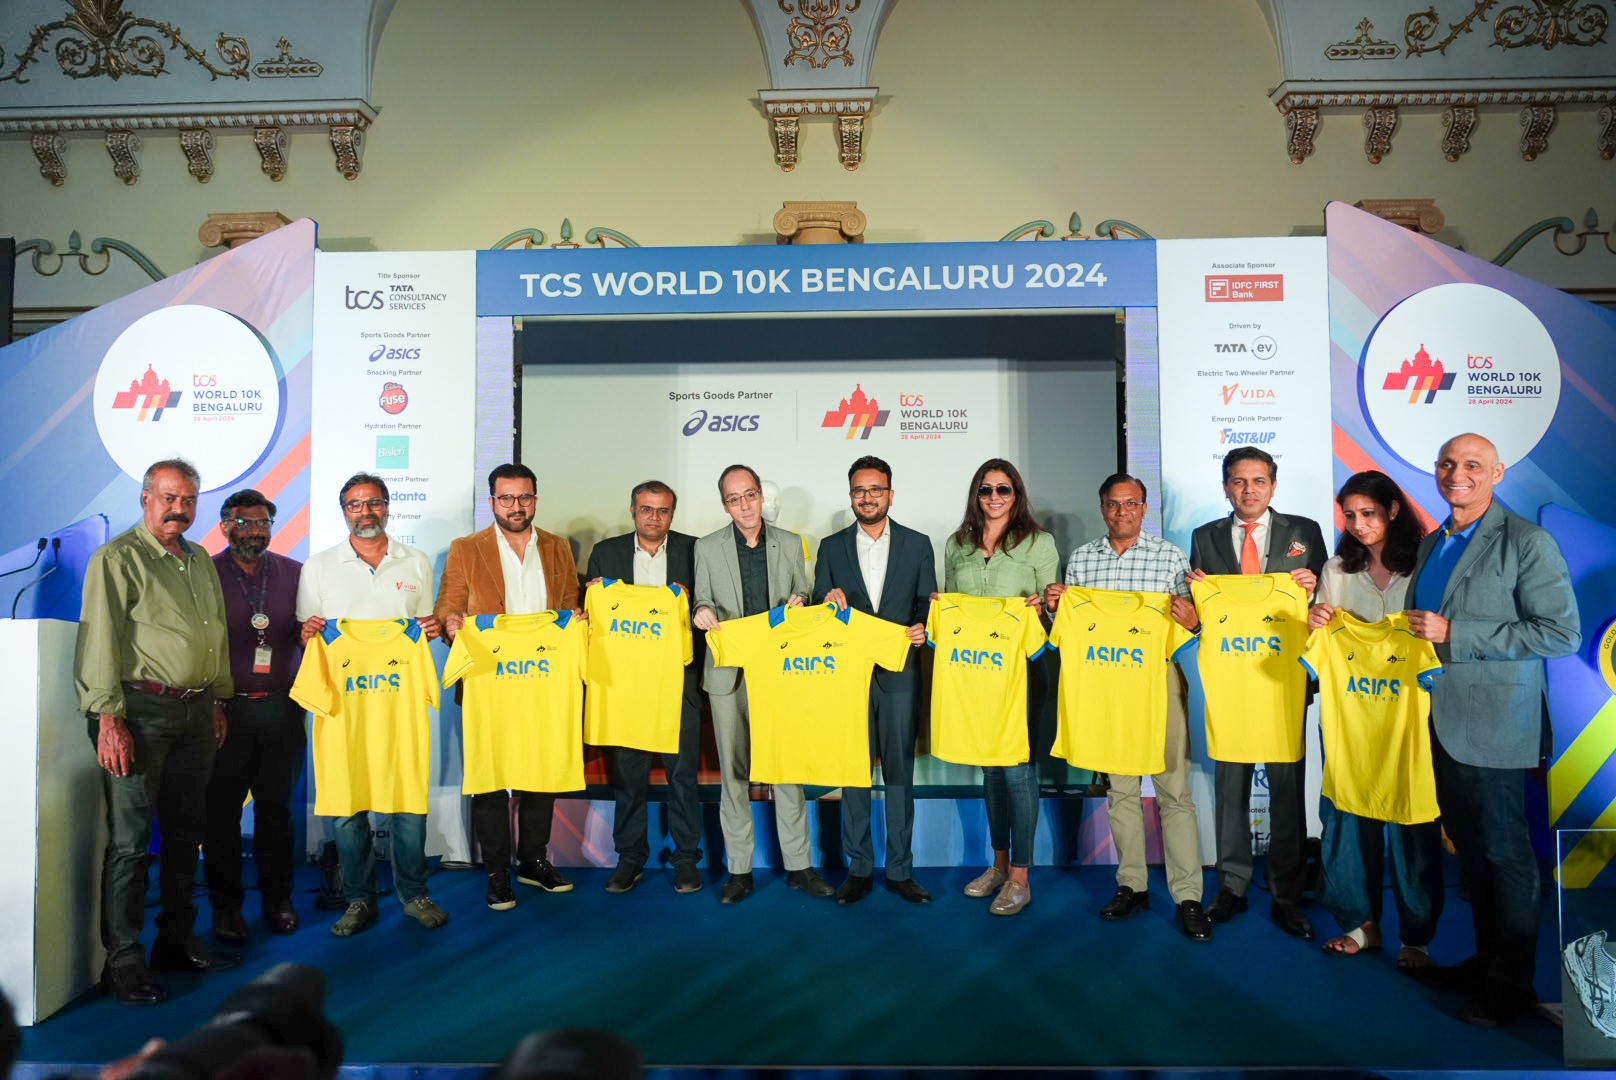 TCS World 10K Bengaluru 2024 draws record participation ~ 30,000+ runners registered